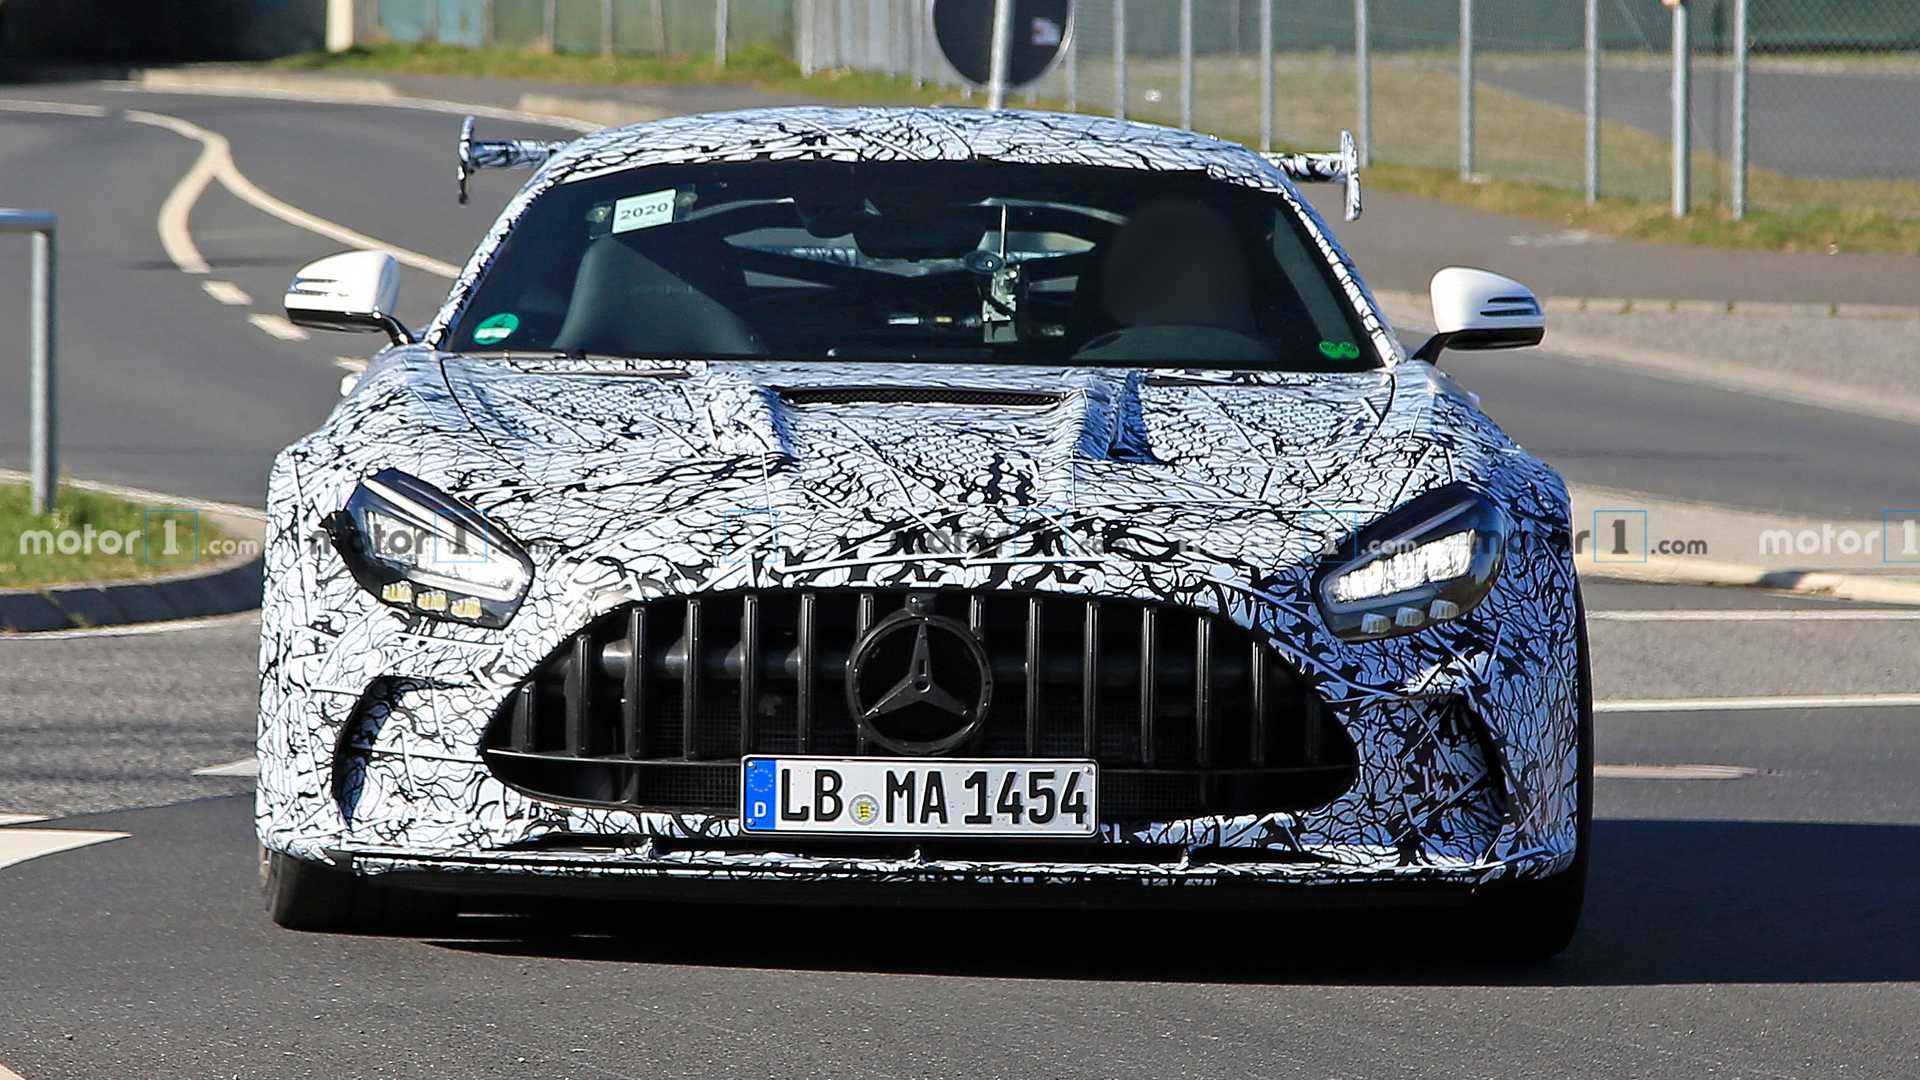 Mercedes AMG GT Black Series Debuts In July: Report